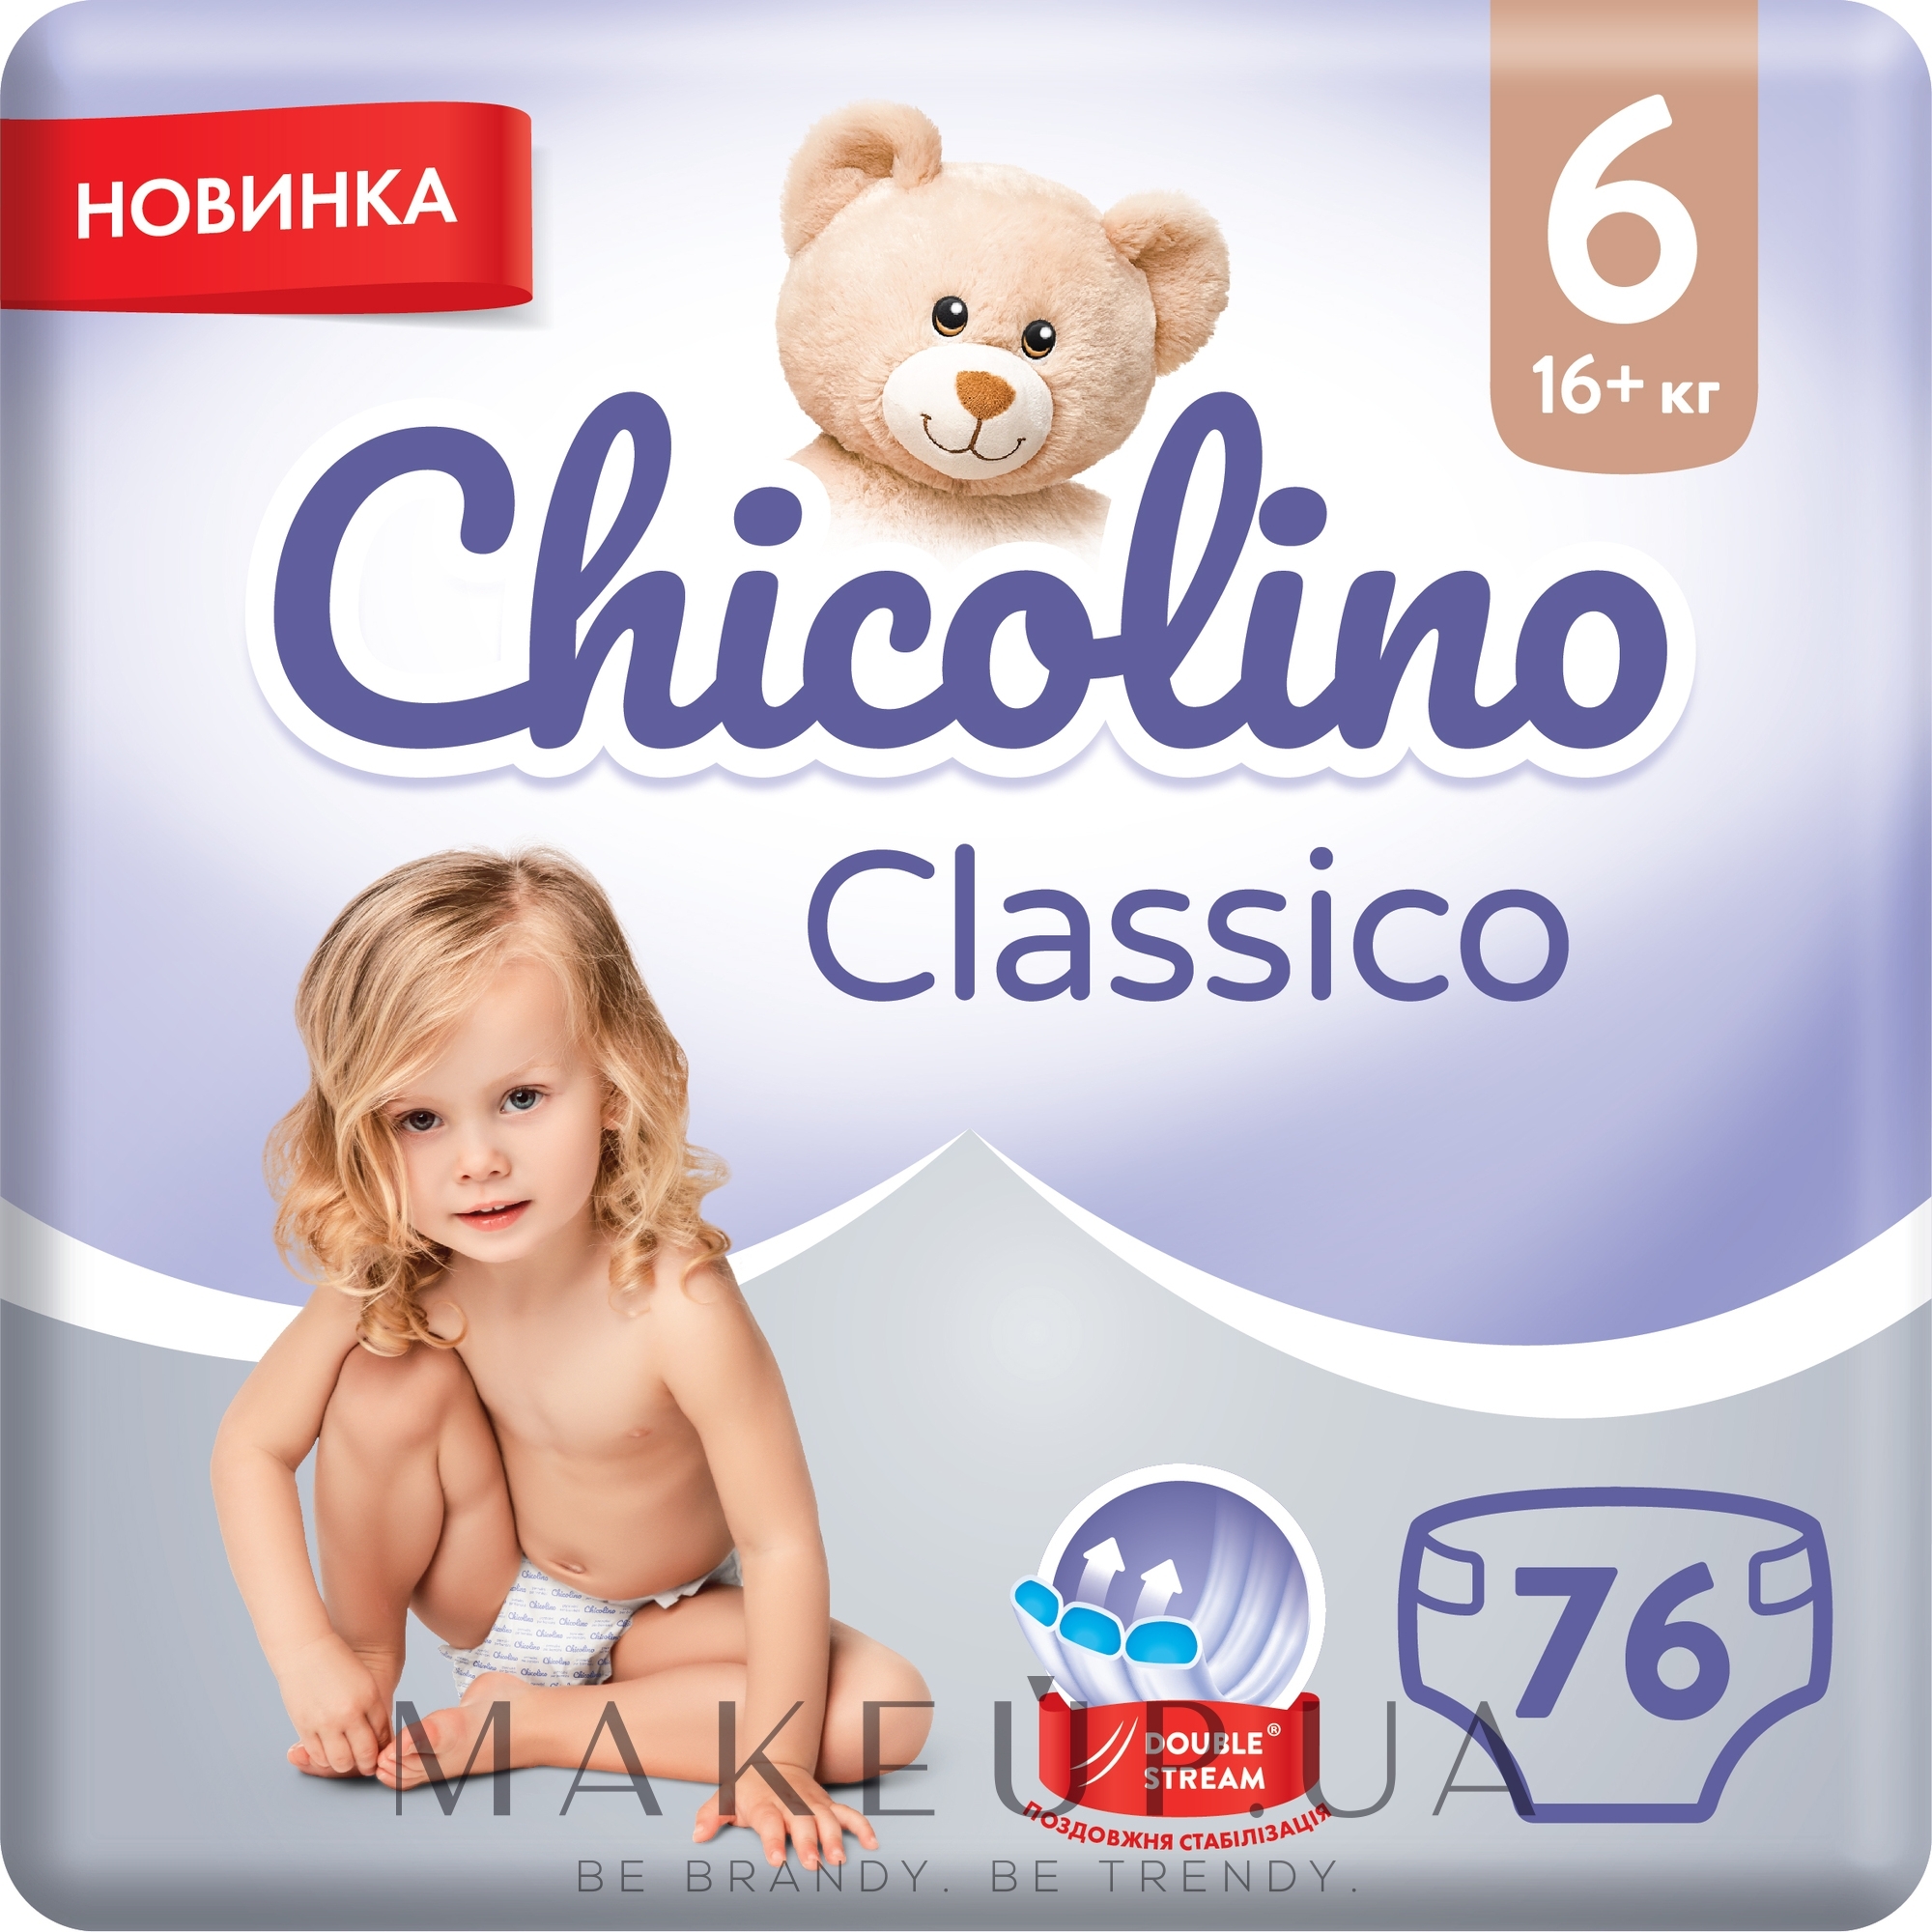 Детские подгузники "Classico", 16+ кг, размер 6, 76 шт. - Chicolino — фото 76шт